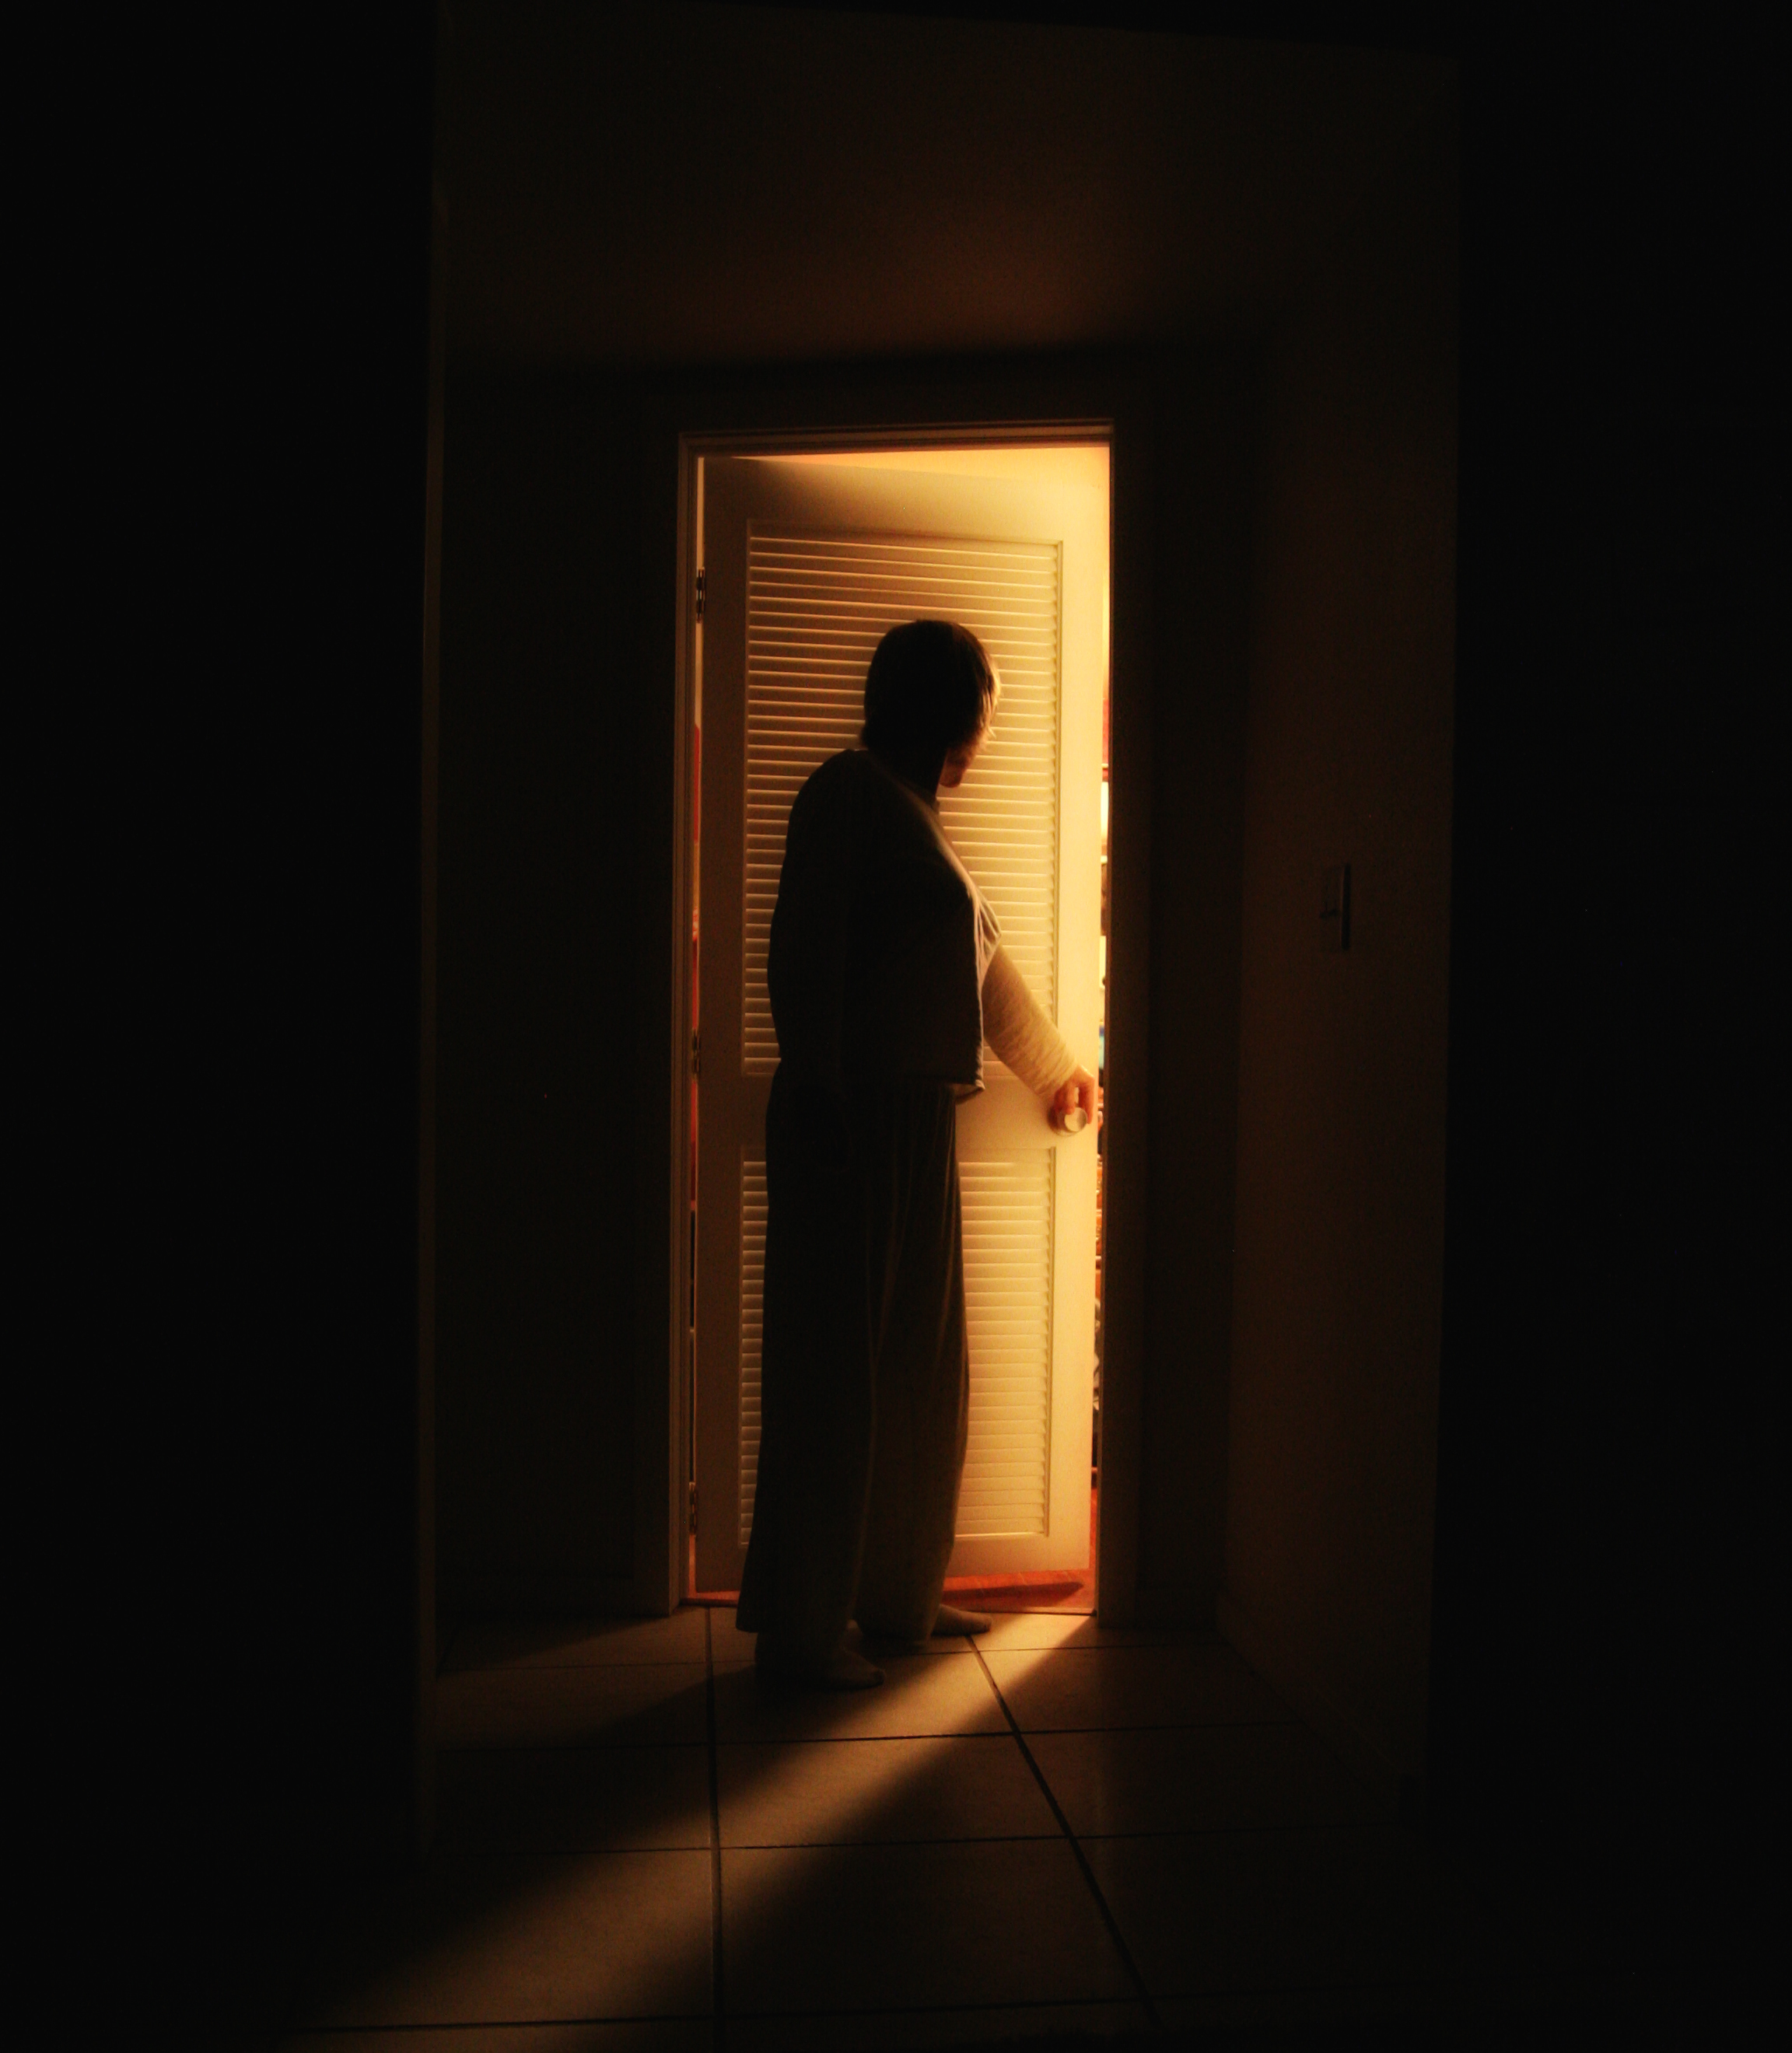 A person outside a bedroom door | Source: Shutterstock.com